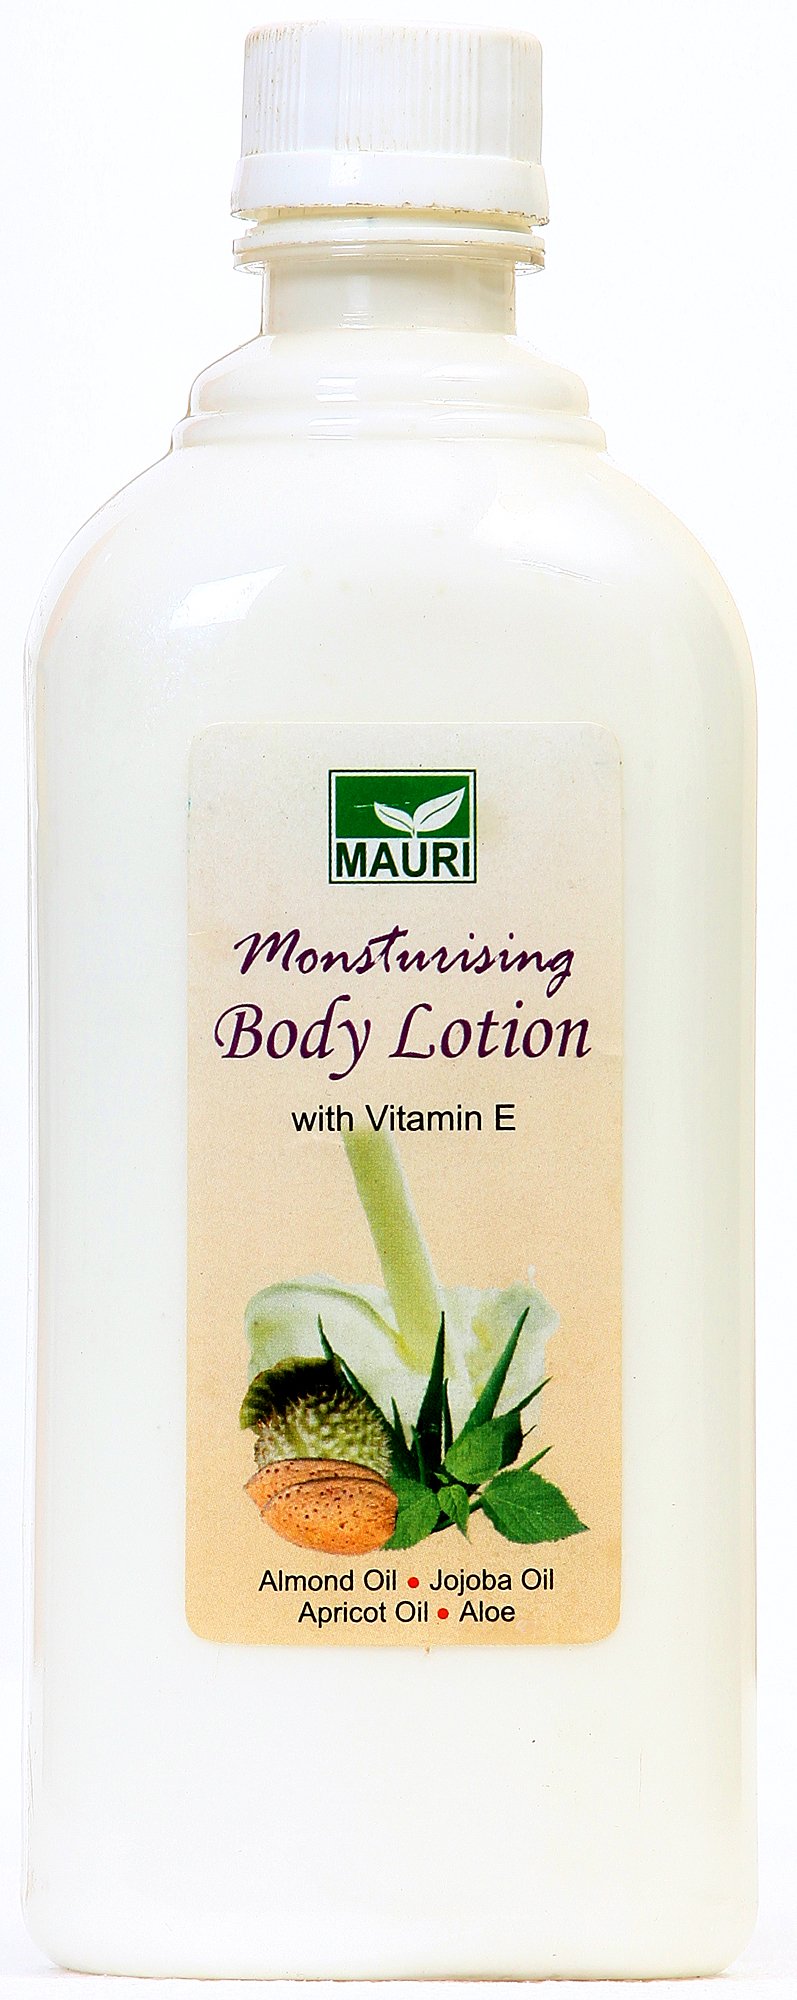 Mauri Moisturising Body Lotion - book cover